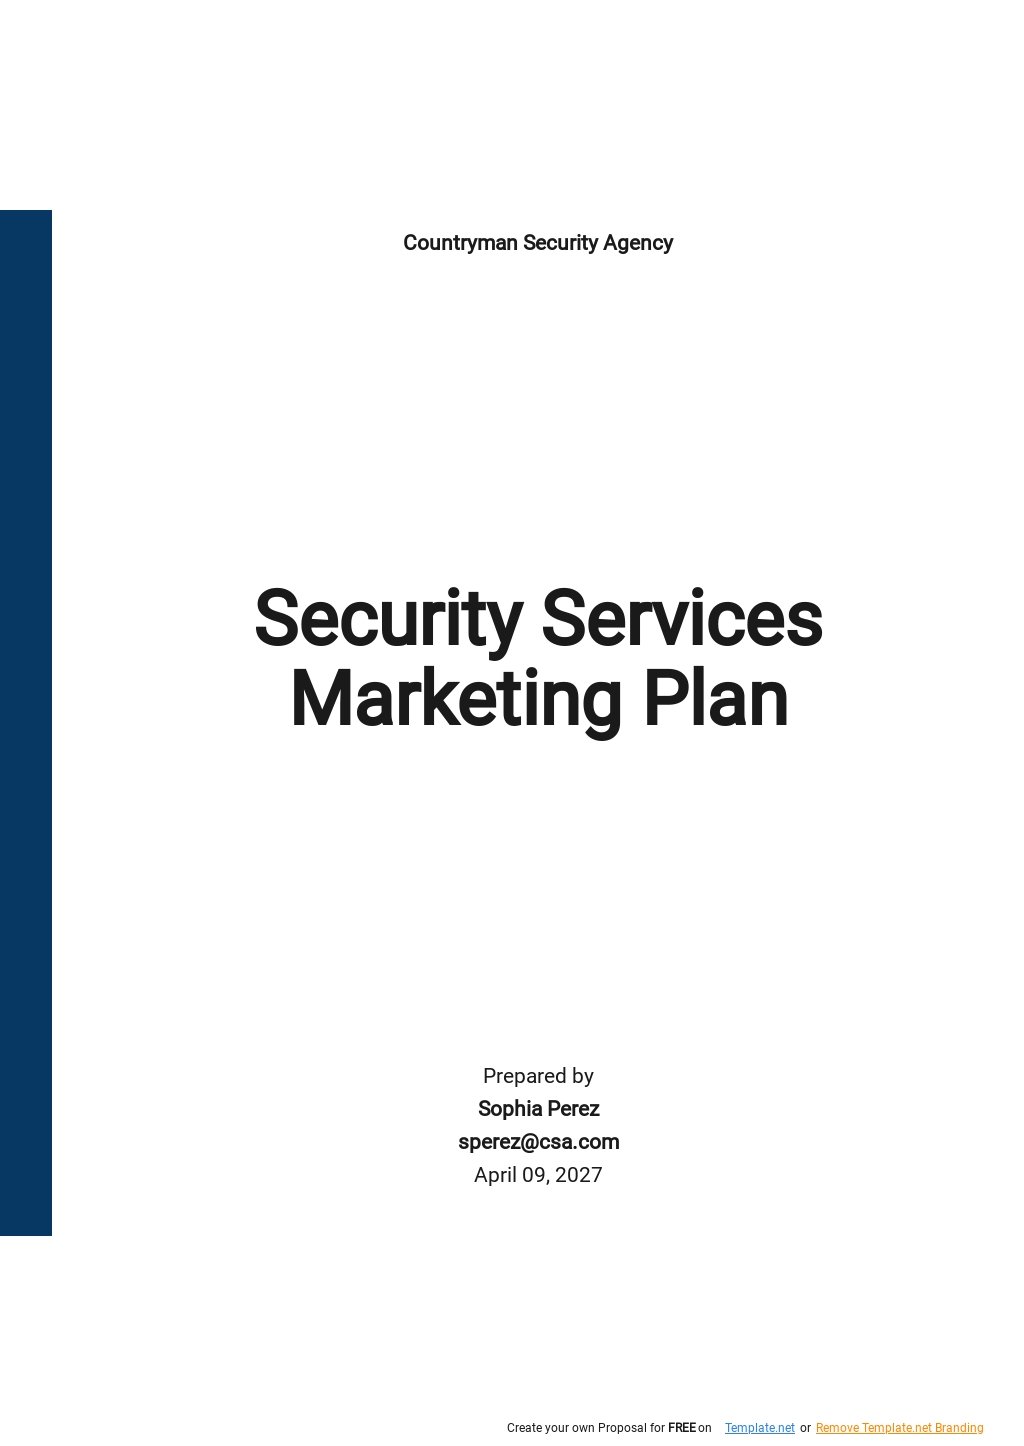 security company business plan sample pdf